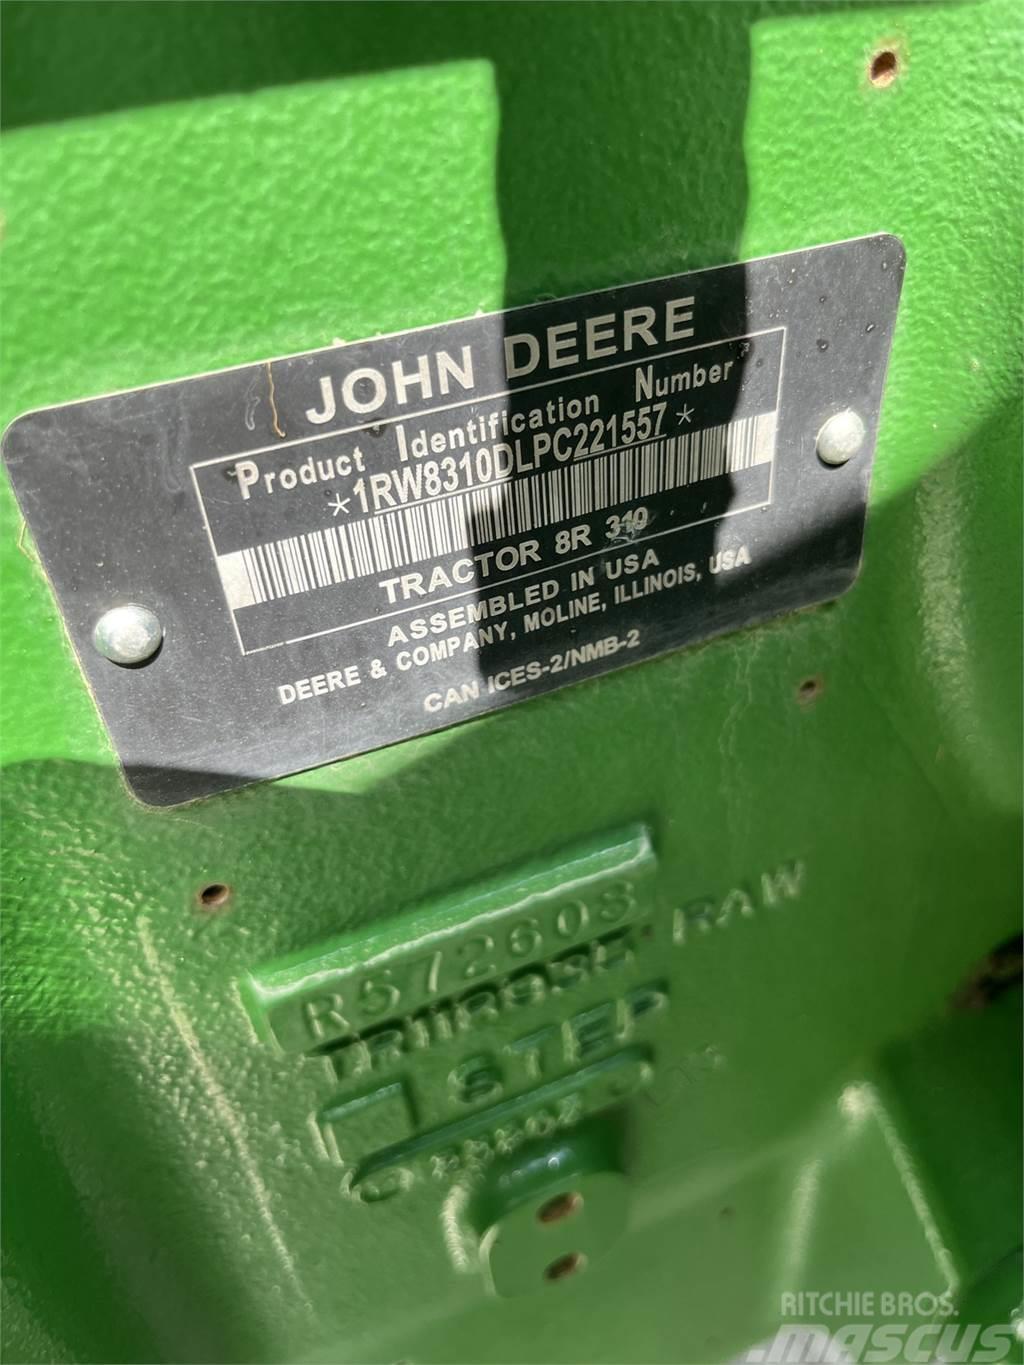 John Deere 8R 310 Ciągniki rolnicze